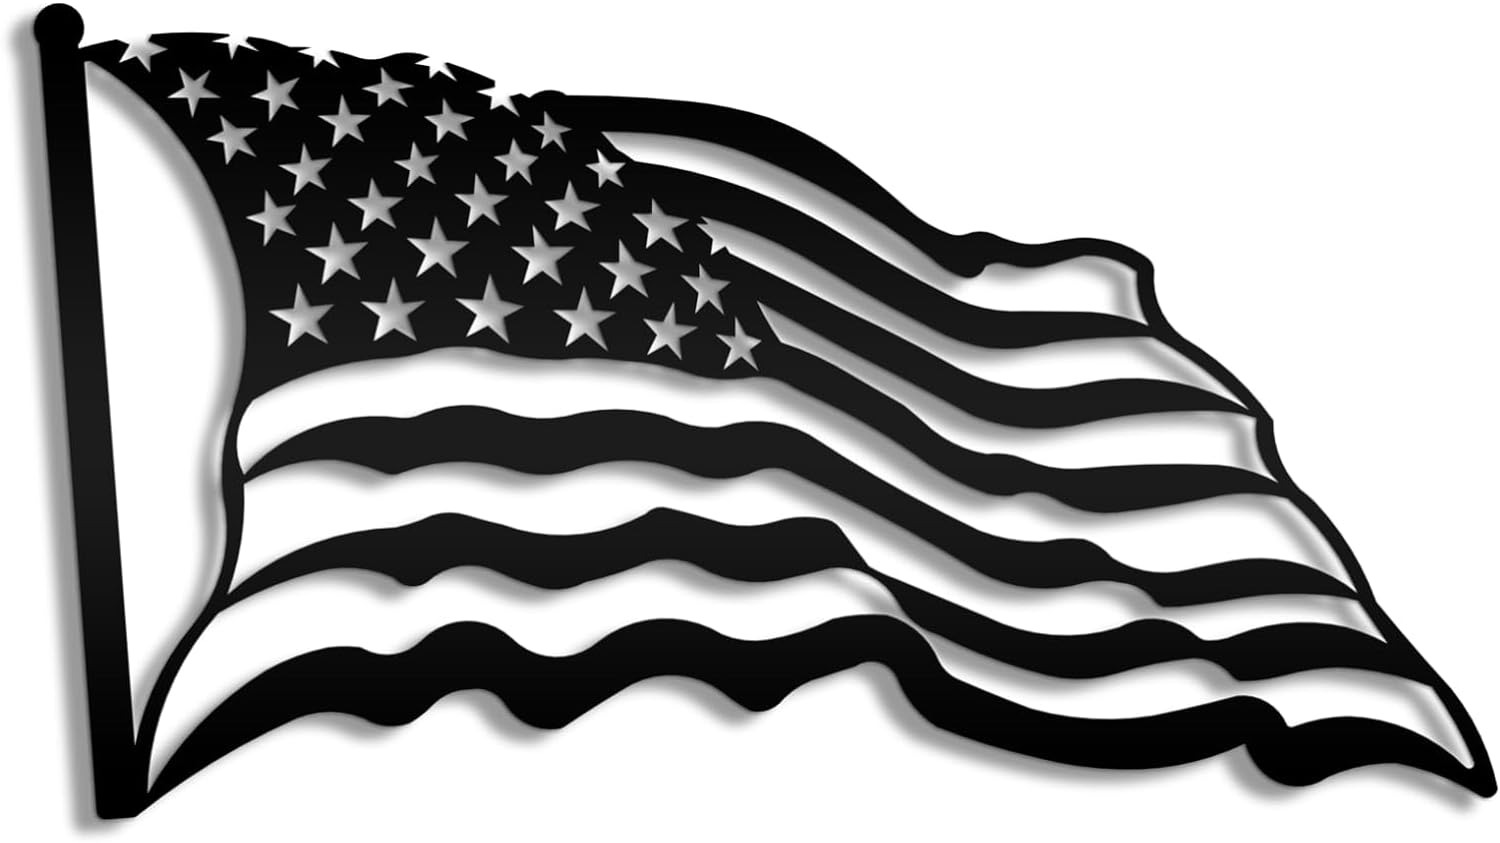 Patriotic 16-Inch Metal Wall Art: Wavy American Flag with Durable Powder Coating